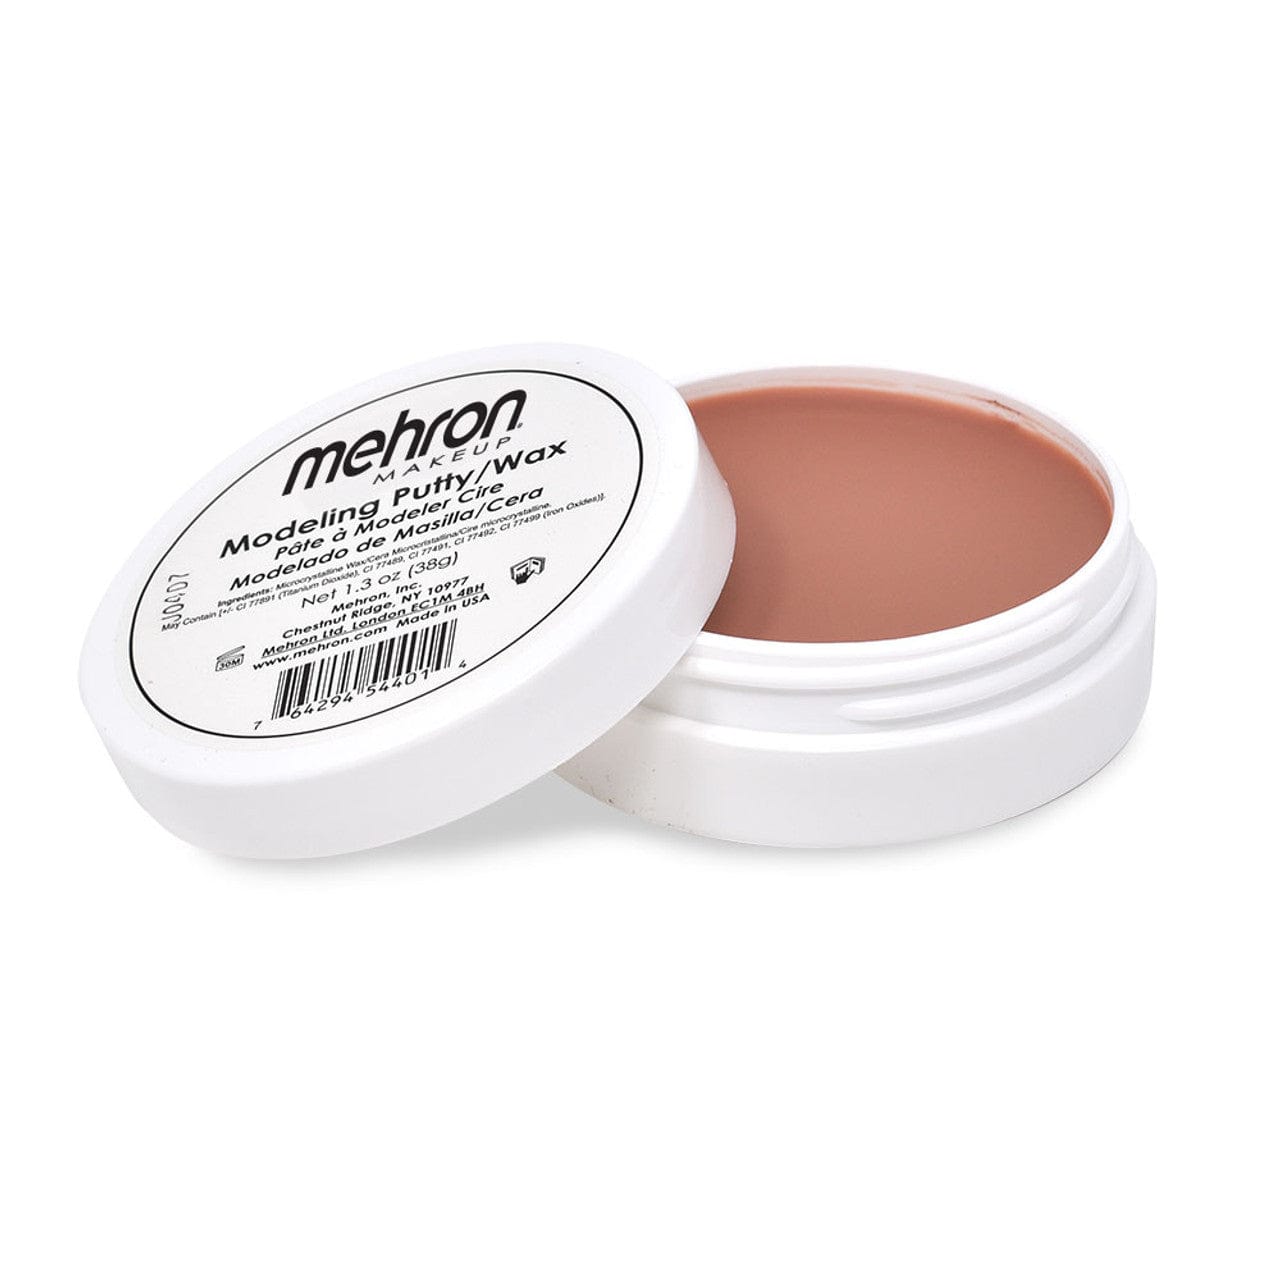 Mehron makeup Professional Modeling Putty/Wax 1.3oz